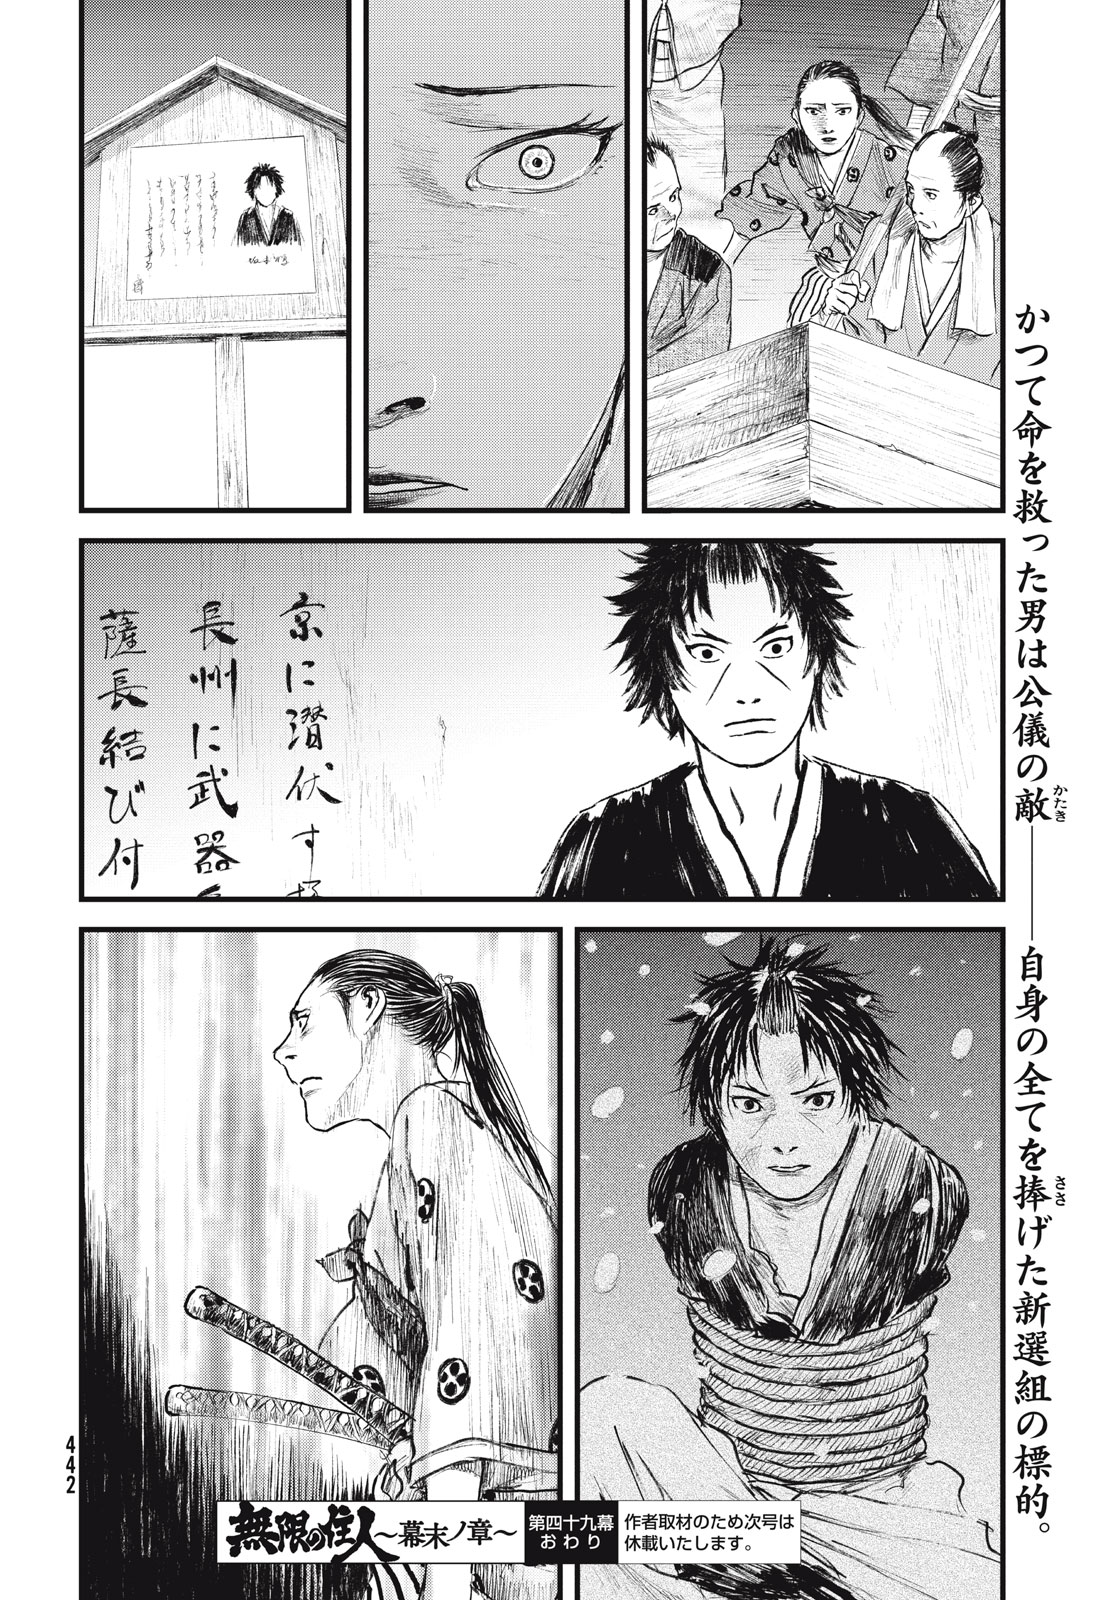 Blade of the Immortal: Bakumatsu Arc - Chapter 49 - Page 30